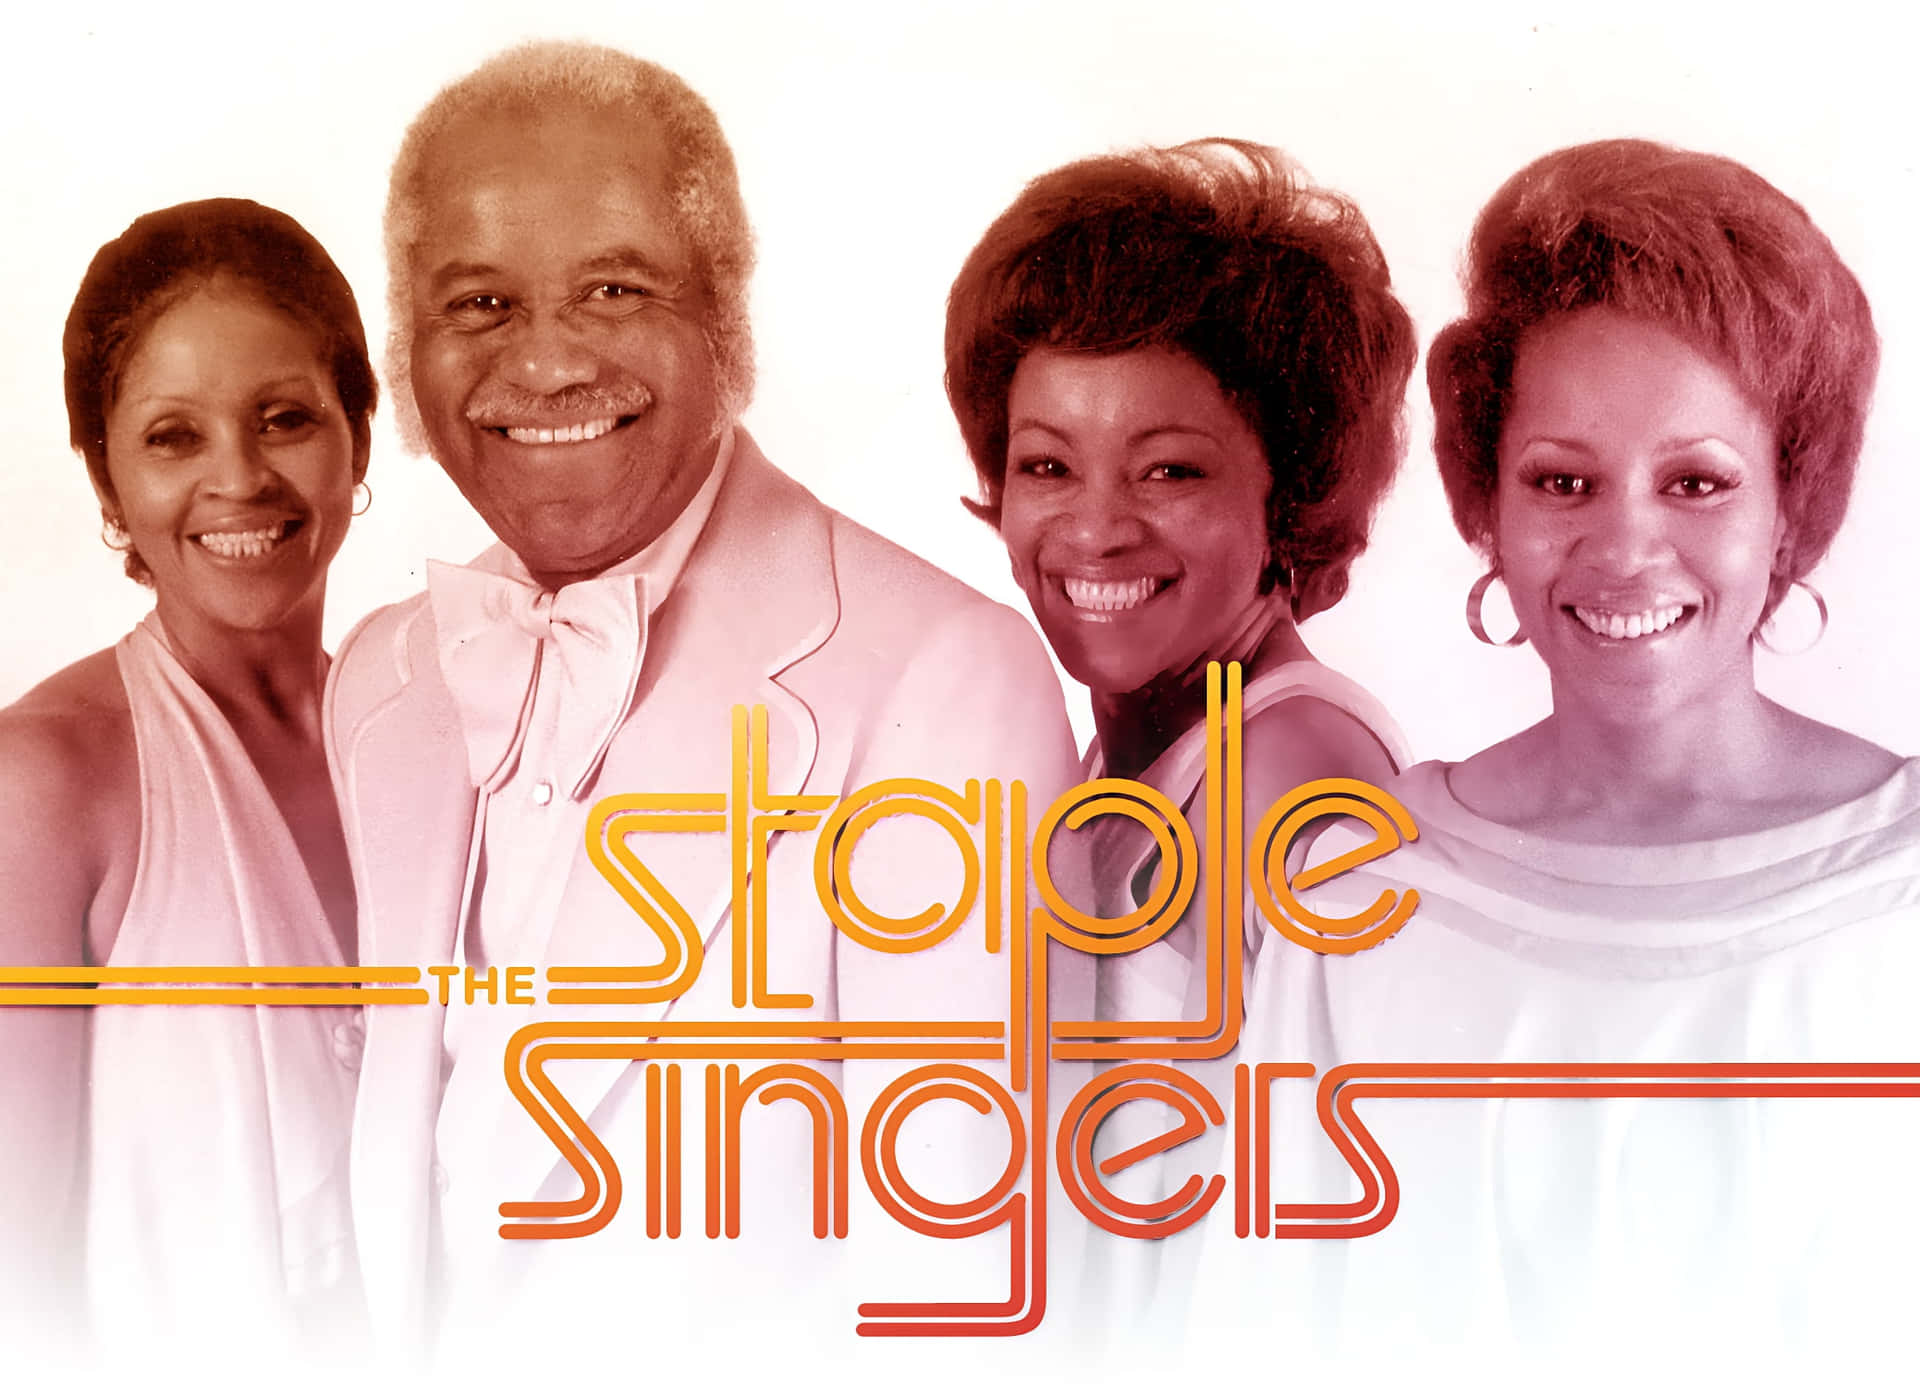 American Staple Singers Digital Art Wallpaper